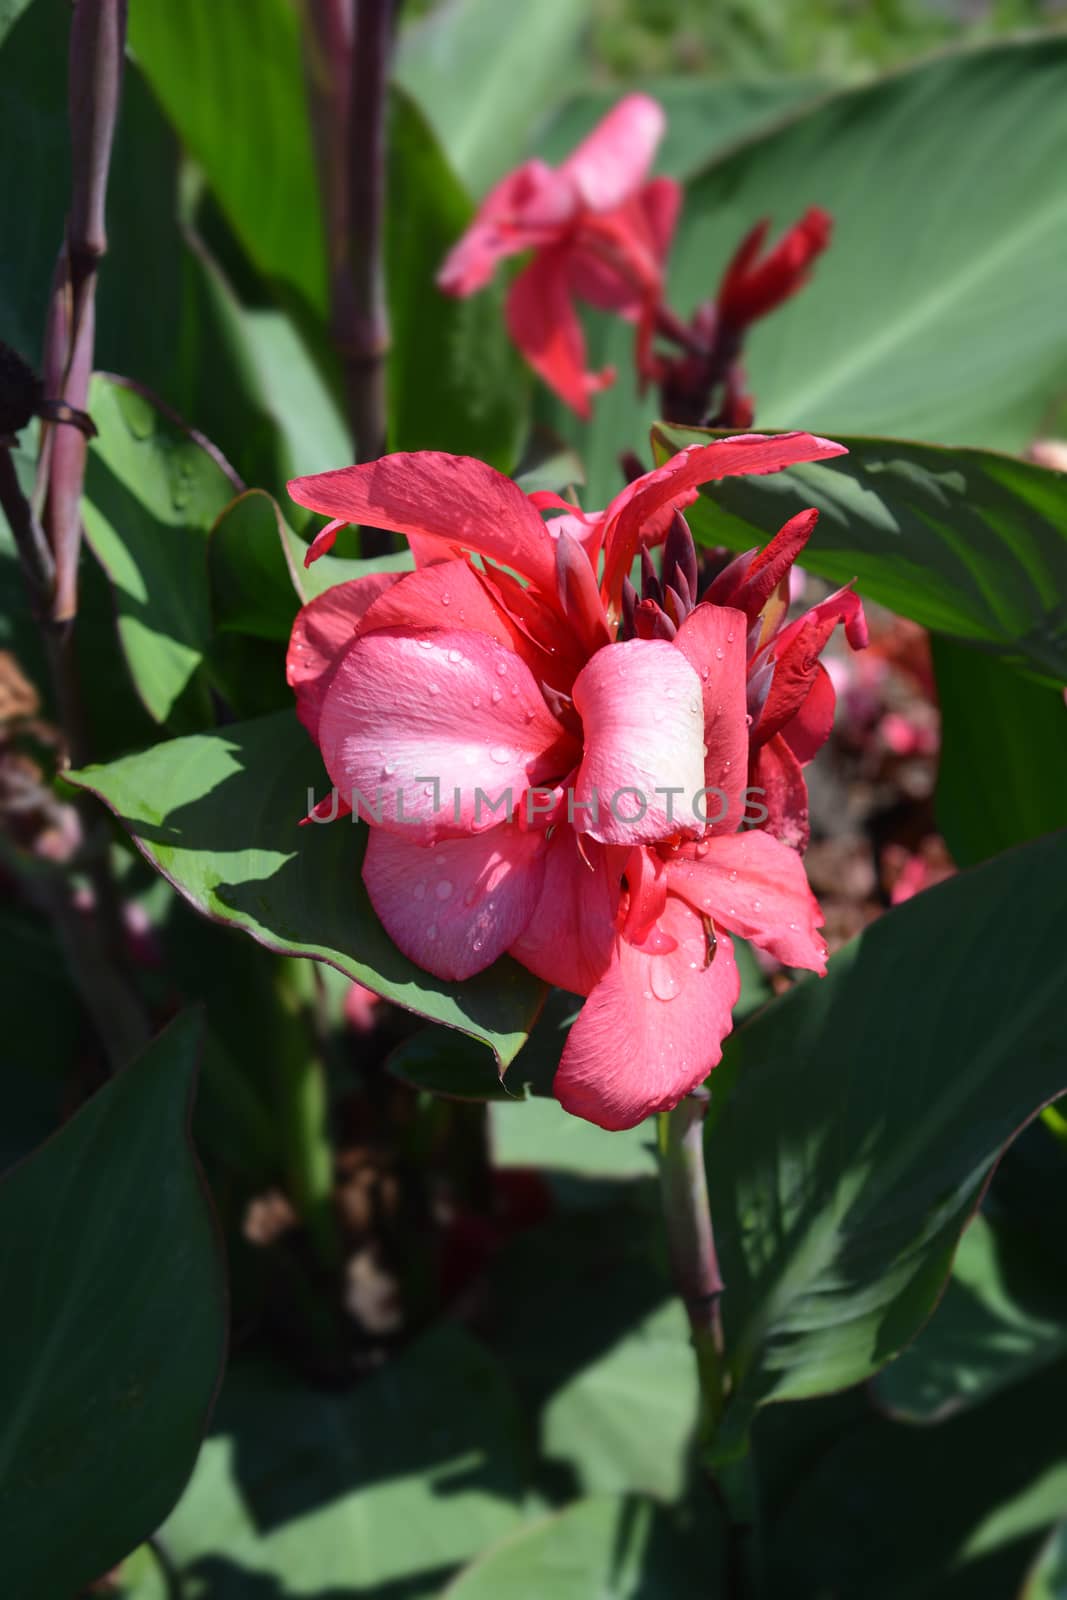 Canna lily Tropical Rose - Latin name - Canna x generalis Tropical Rose